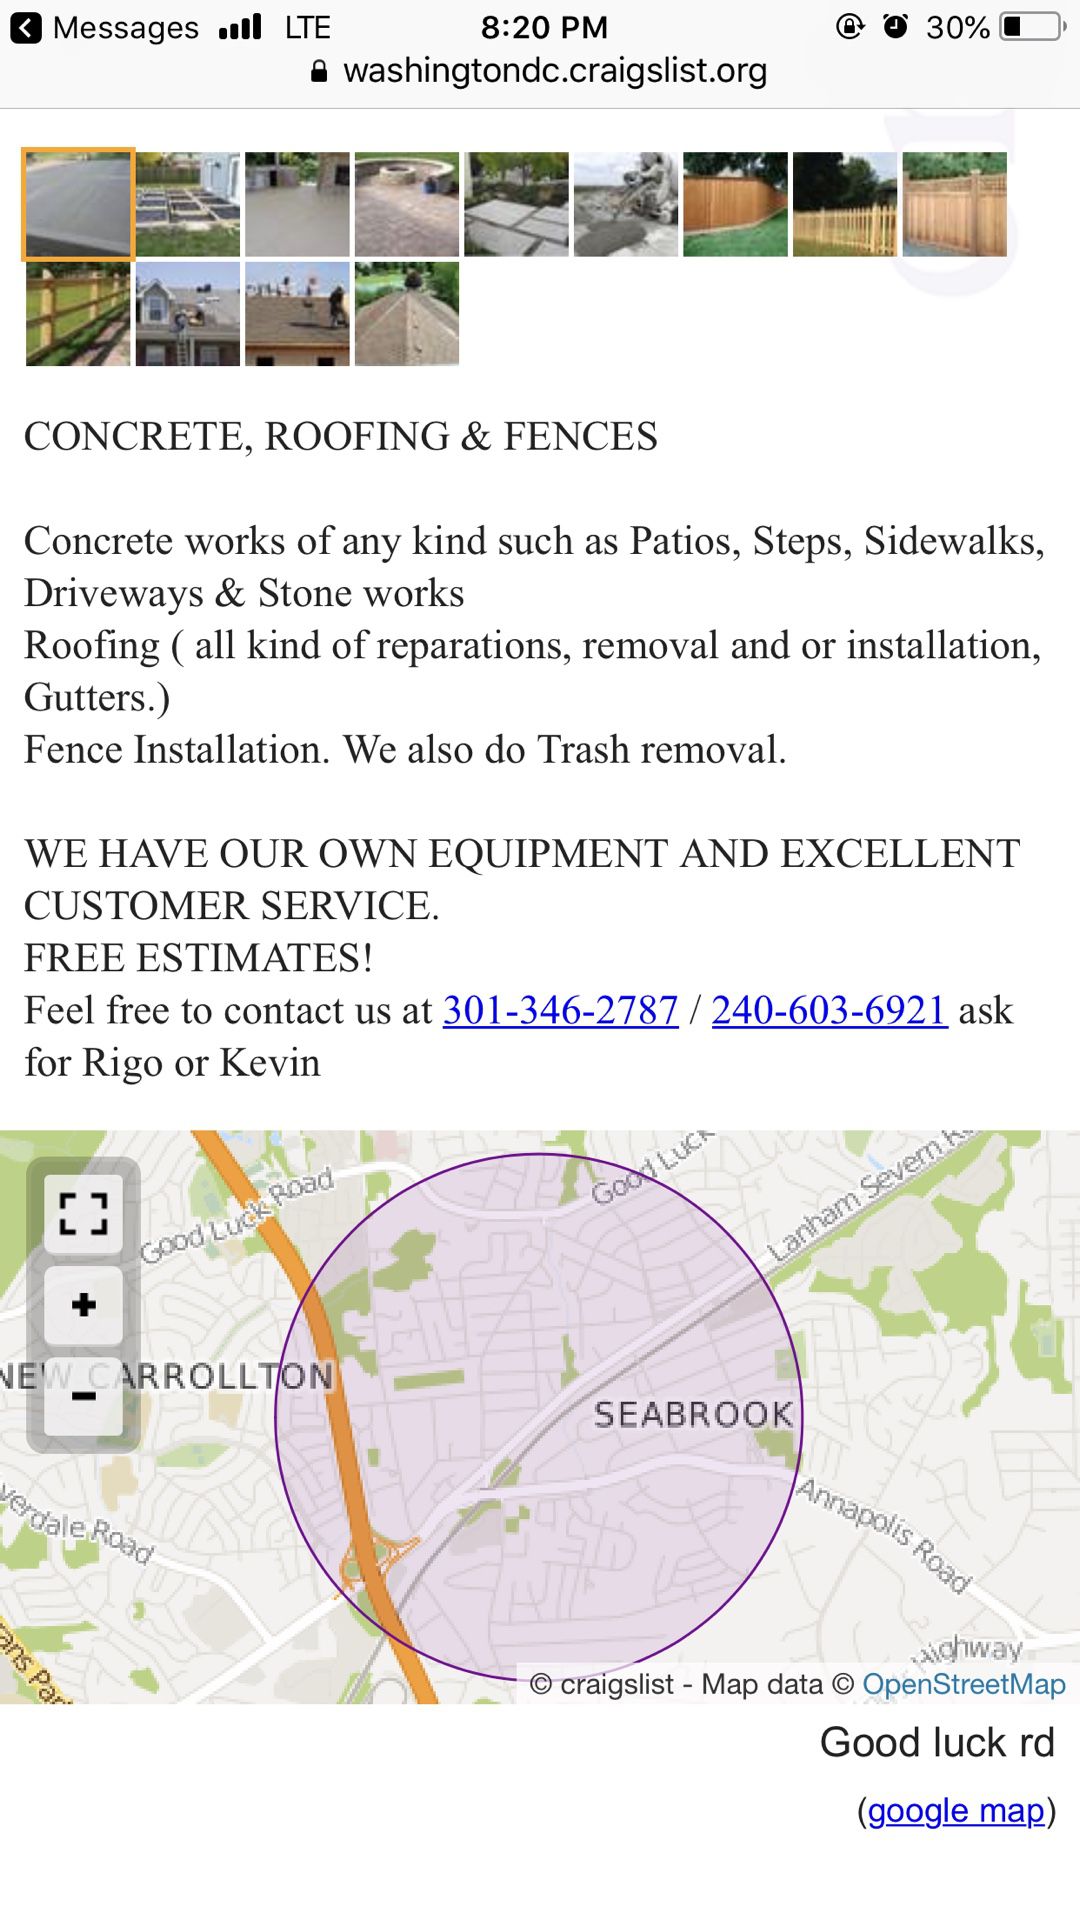 Concrete , roofing, fences & trash removal ! EXCELLENT COMPETITIVE PRICES - free estimates !